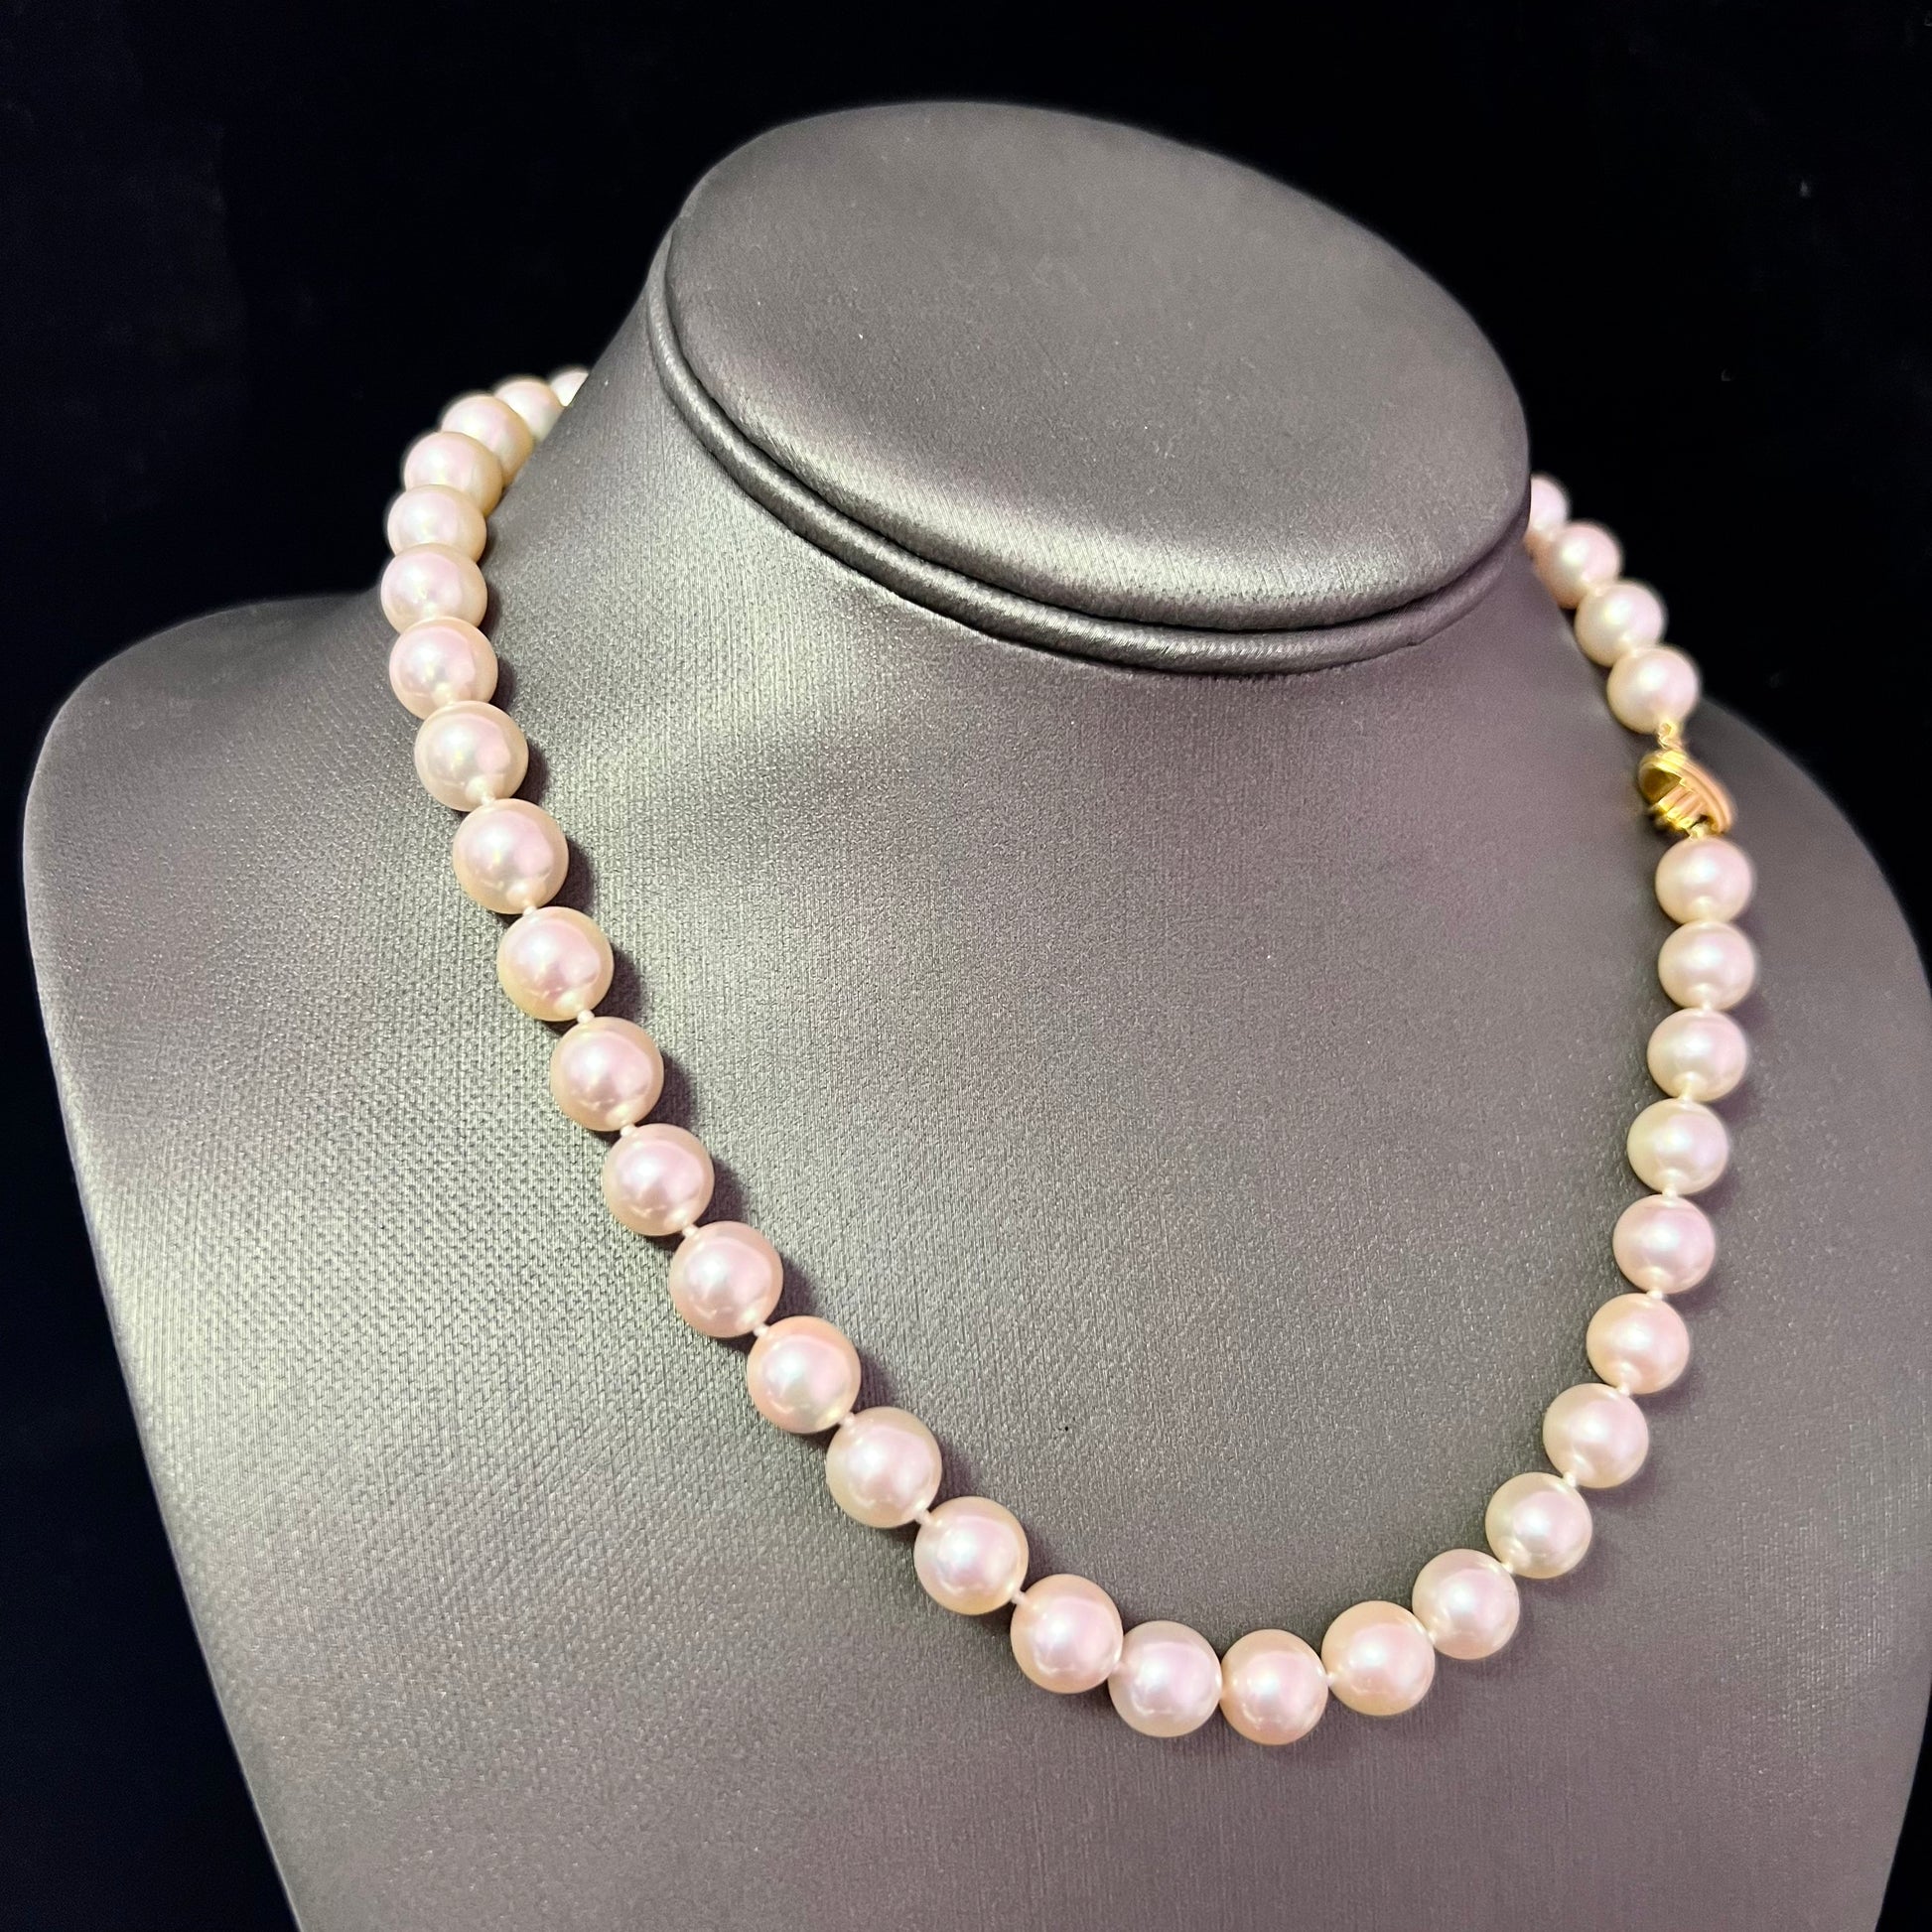 Tiffany & Co Estate Akoya Pearl Necklace 17" 18k Gold 9 mm Certified $24,975 401394 - Certified Fine Jewelry